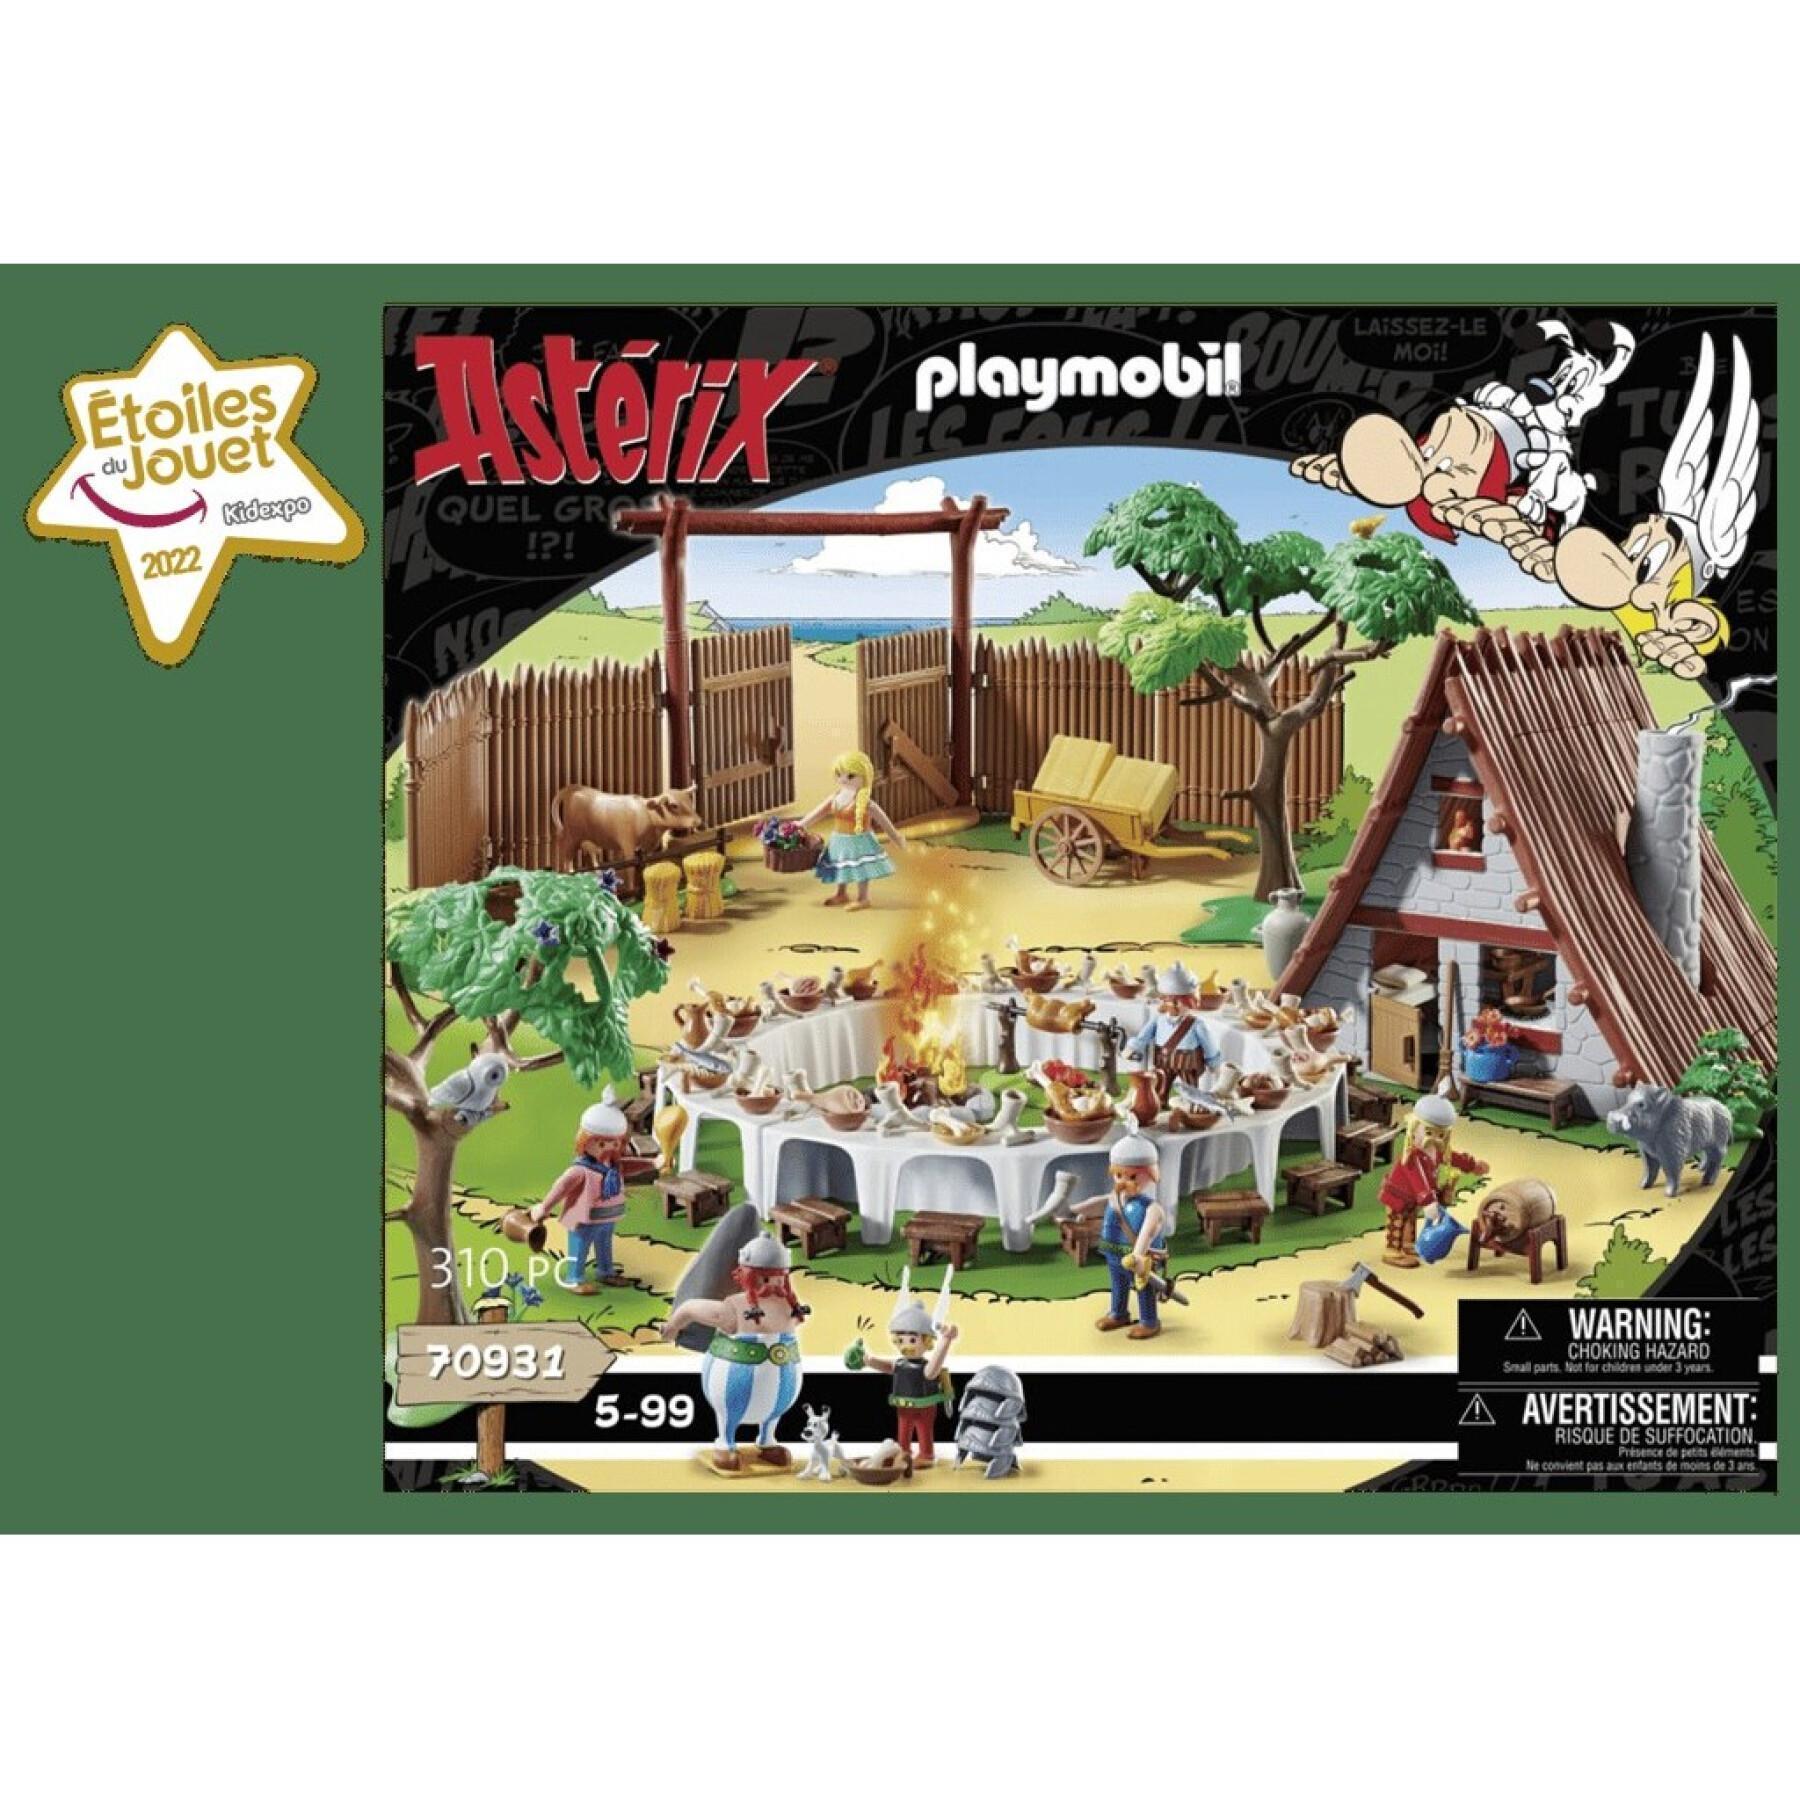 Banquete en la aldea de Astérix Playmobil